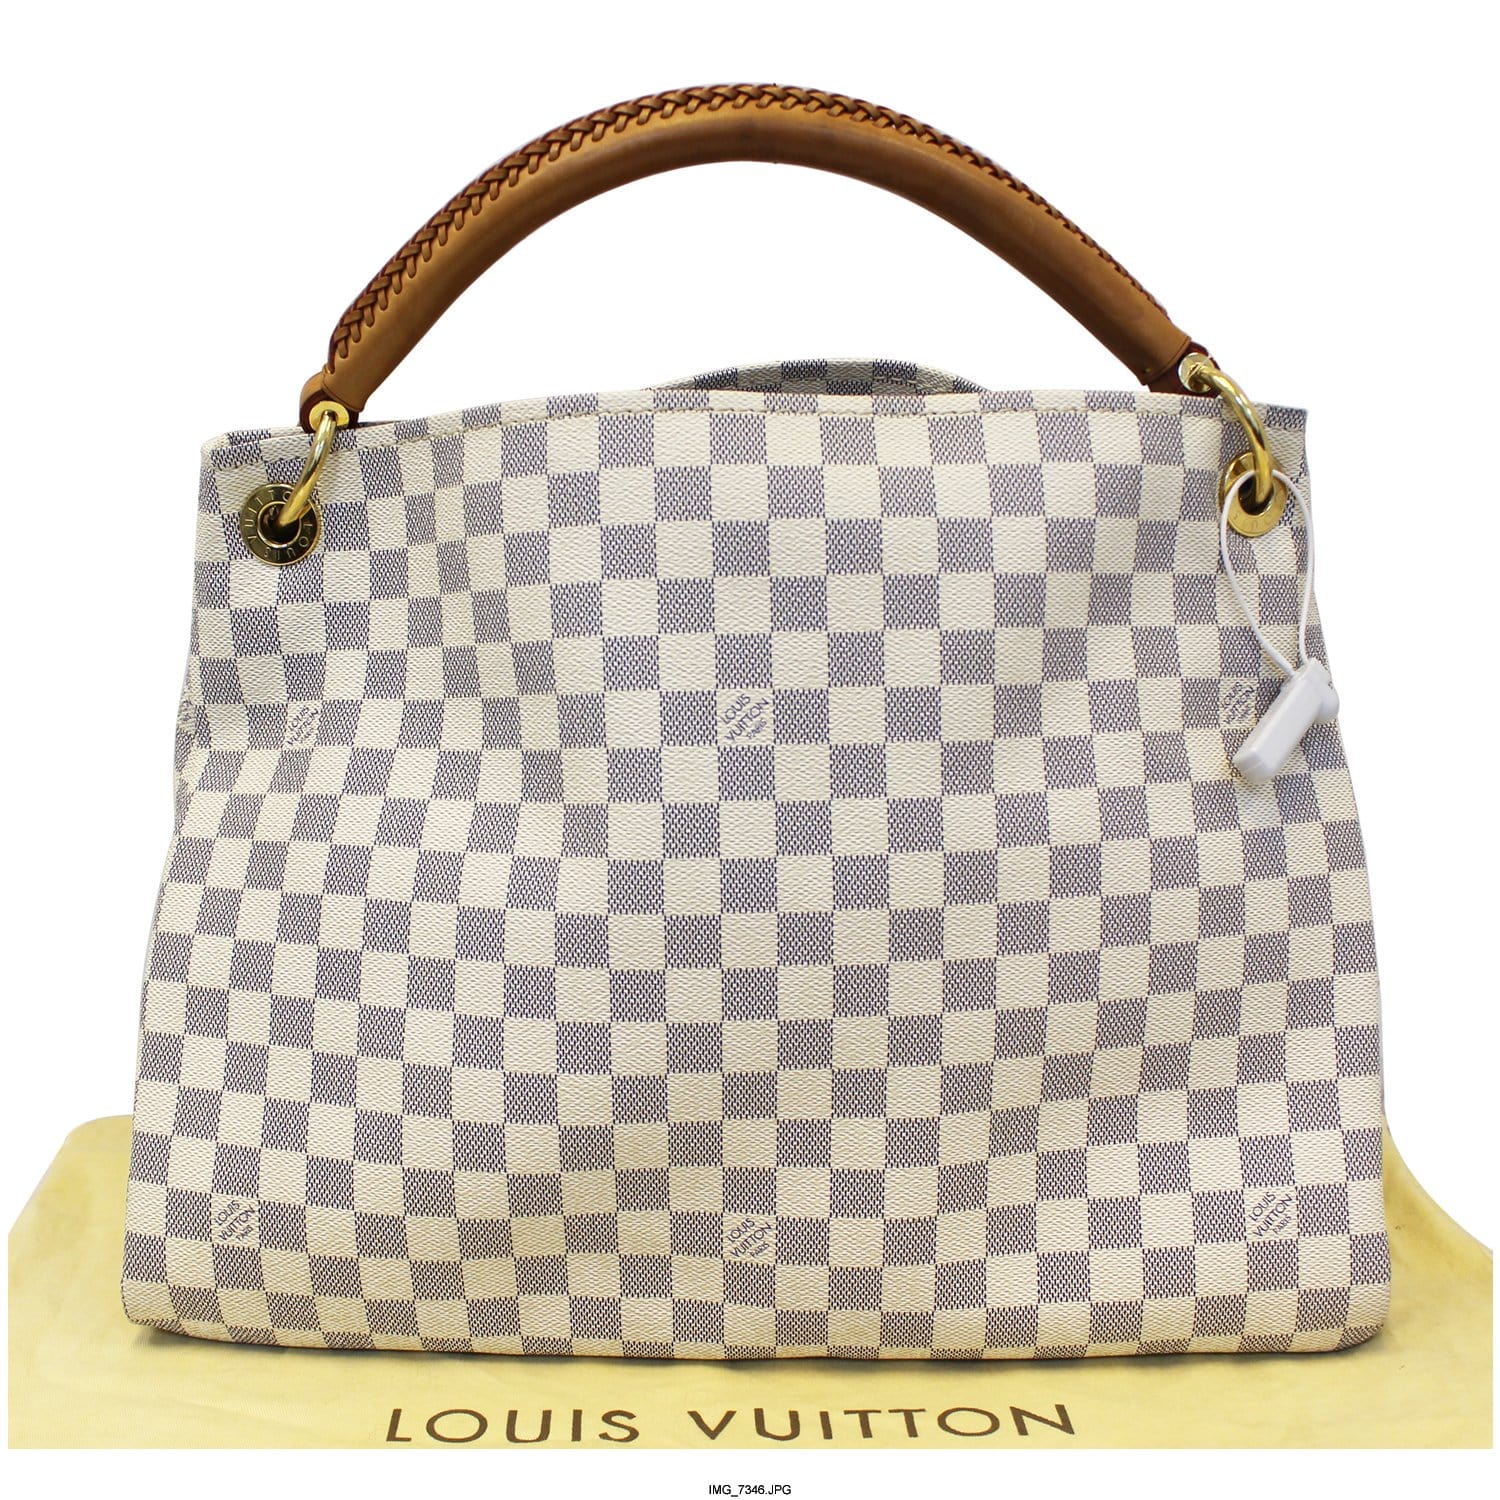 LOUIS VUITTON NEVERFULL MM Damier Azur Tote bag No.978